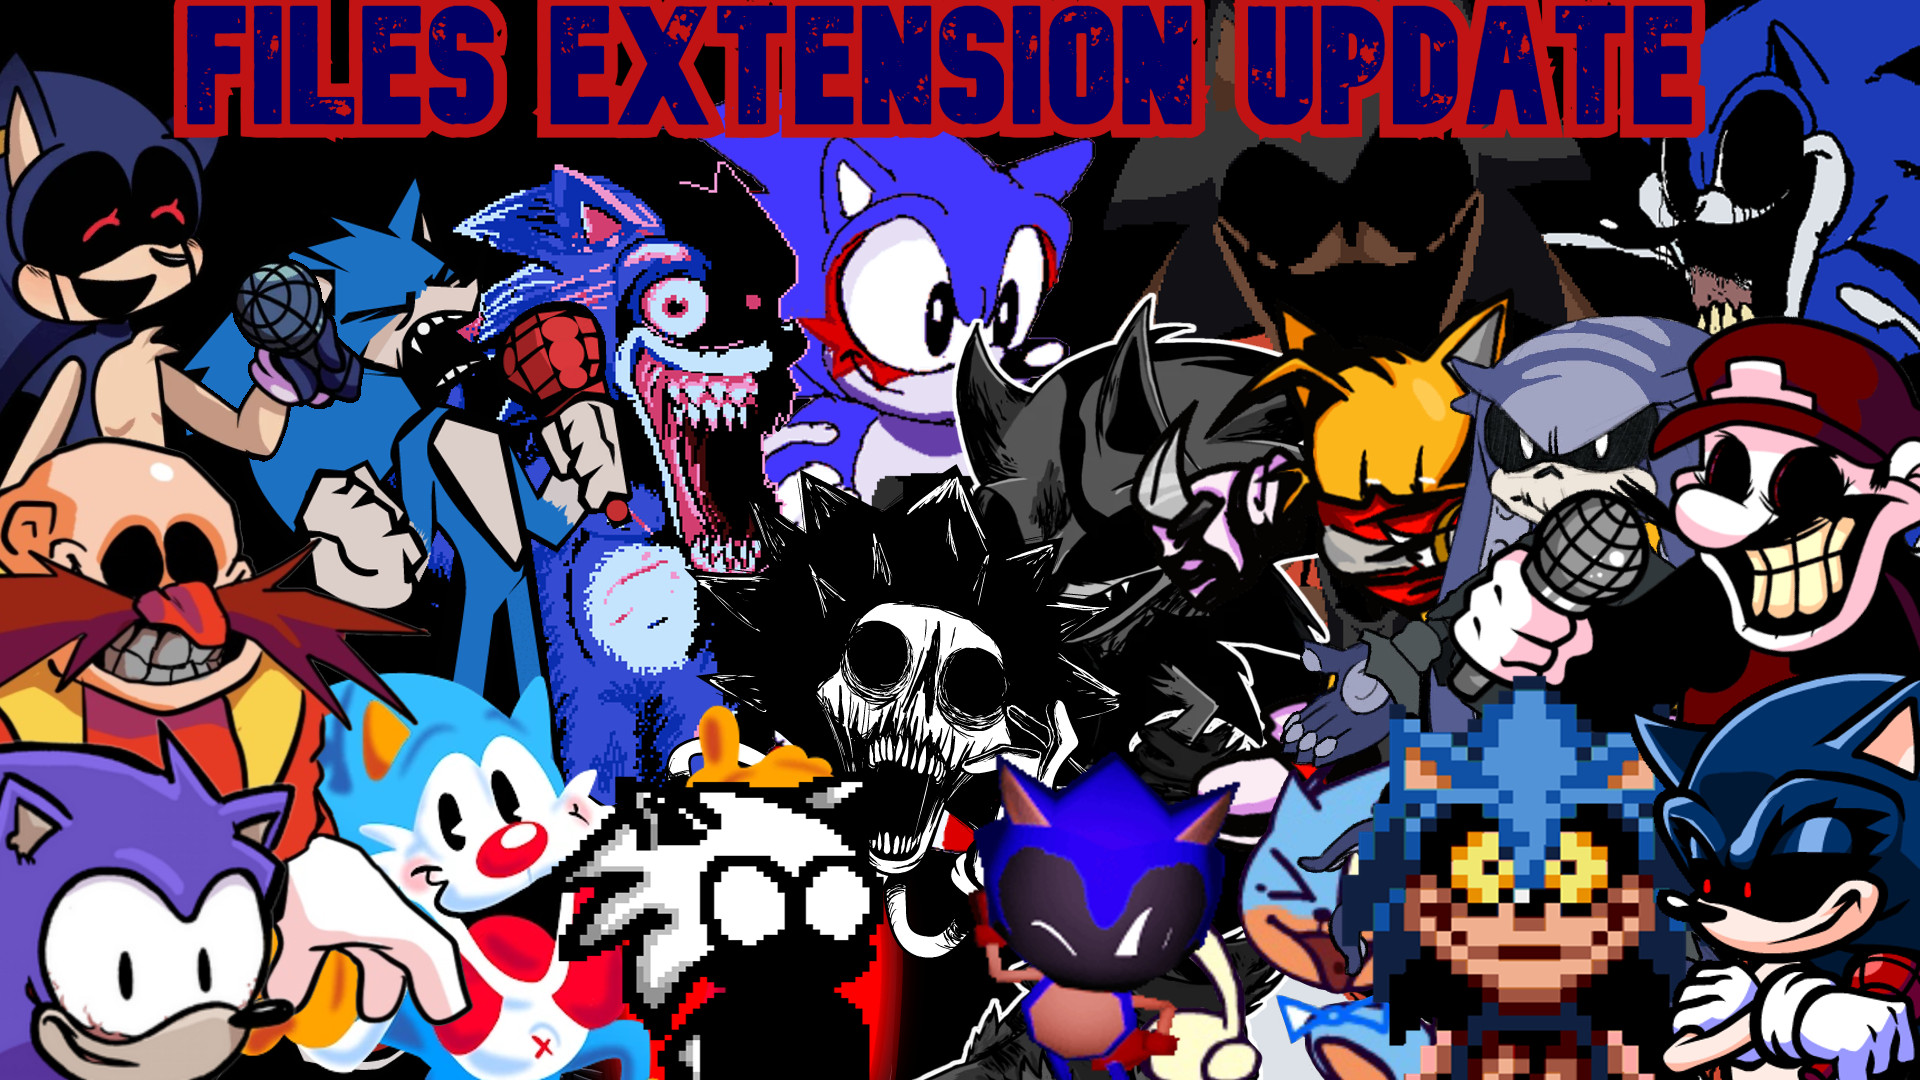 Sonic Exe Fla Recreation [Friday Night Funkin'] [Modding Tools]